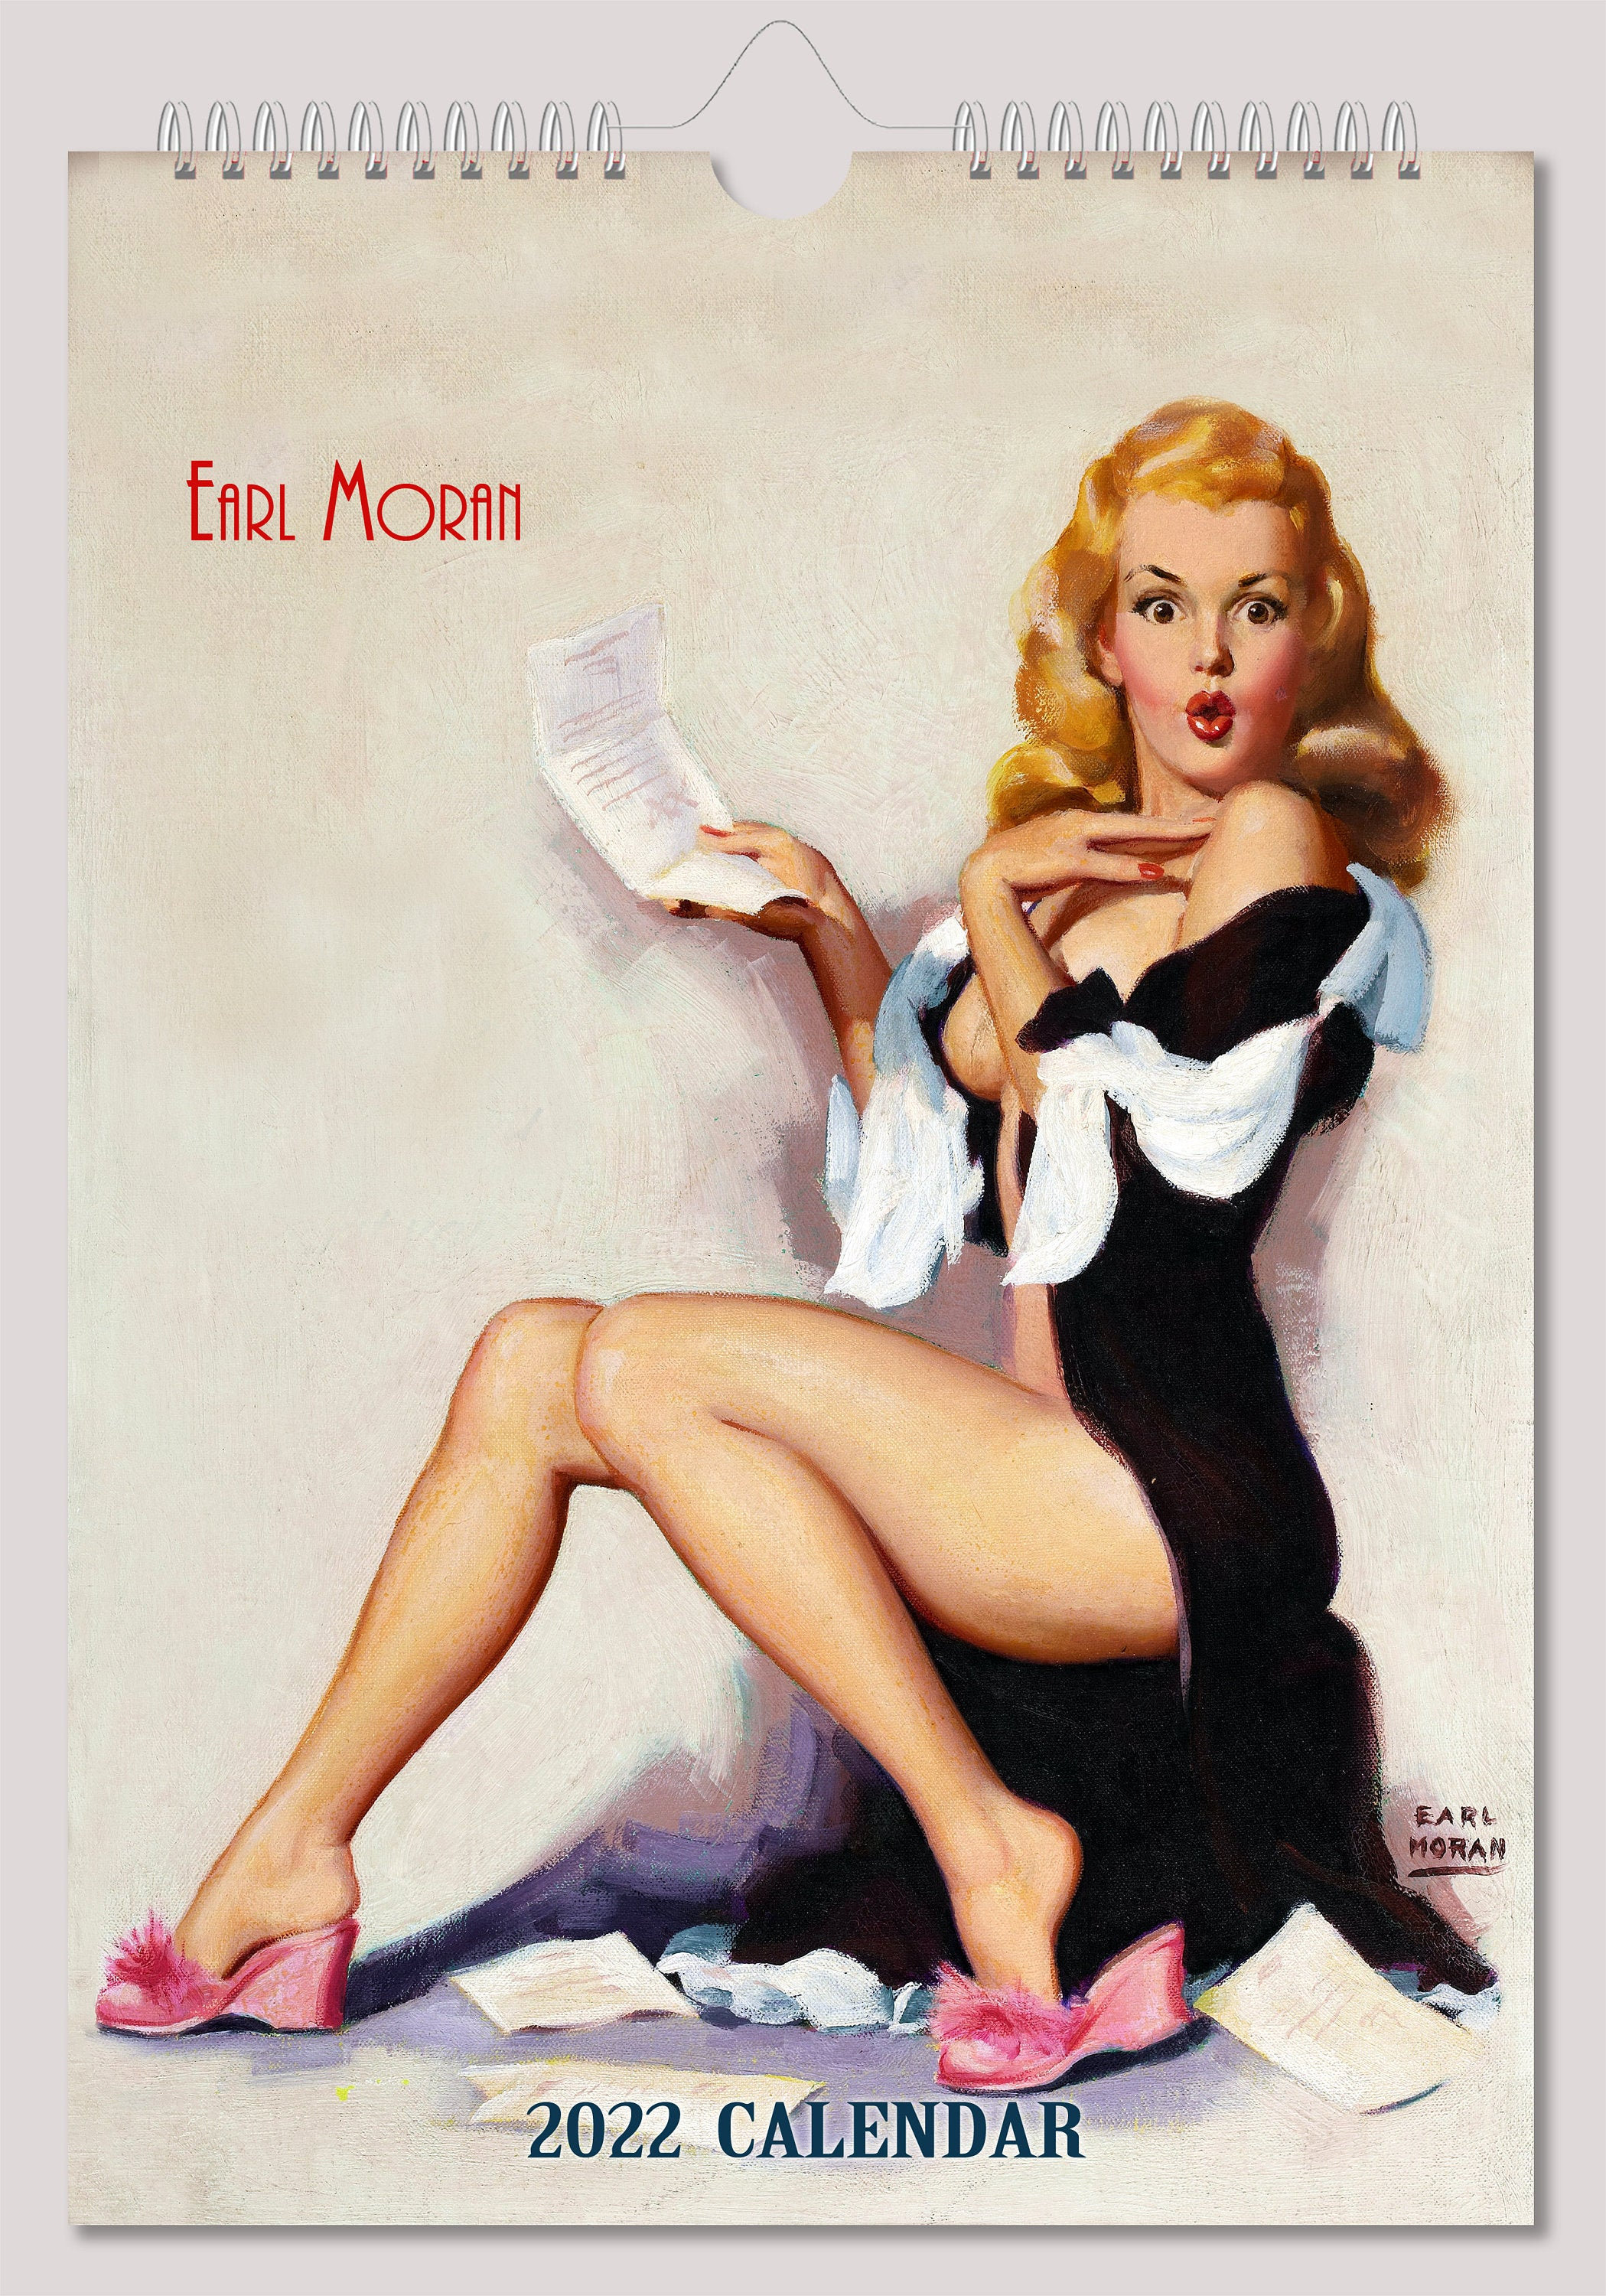 earl-morane-wall-calendar-2022-pin-up-girl-retro-vintage-a4-etsy-uk